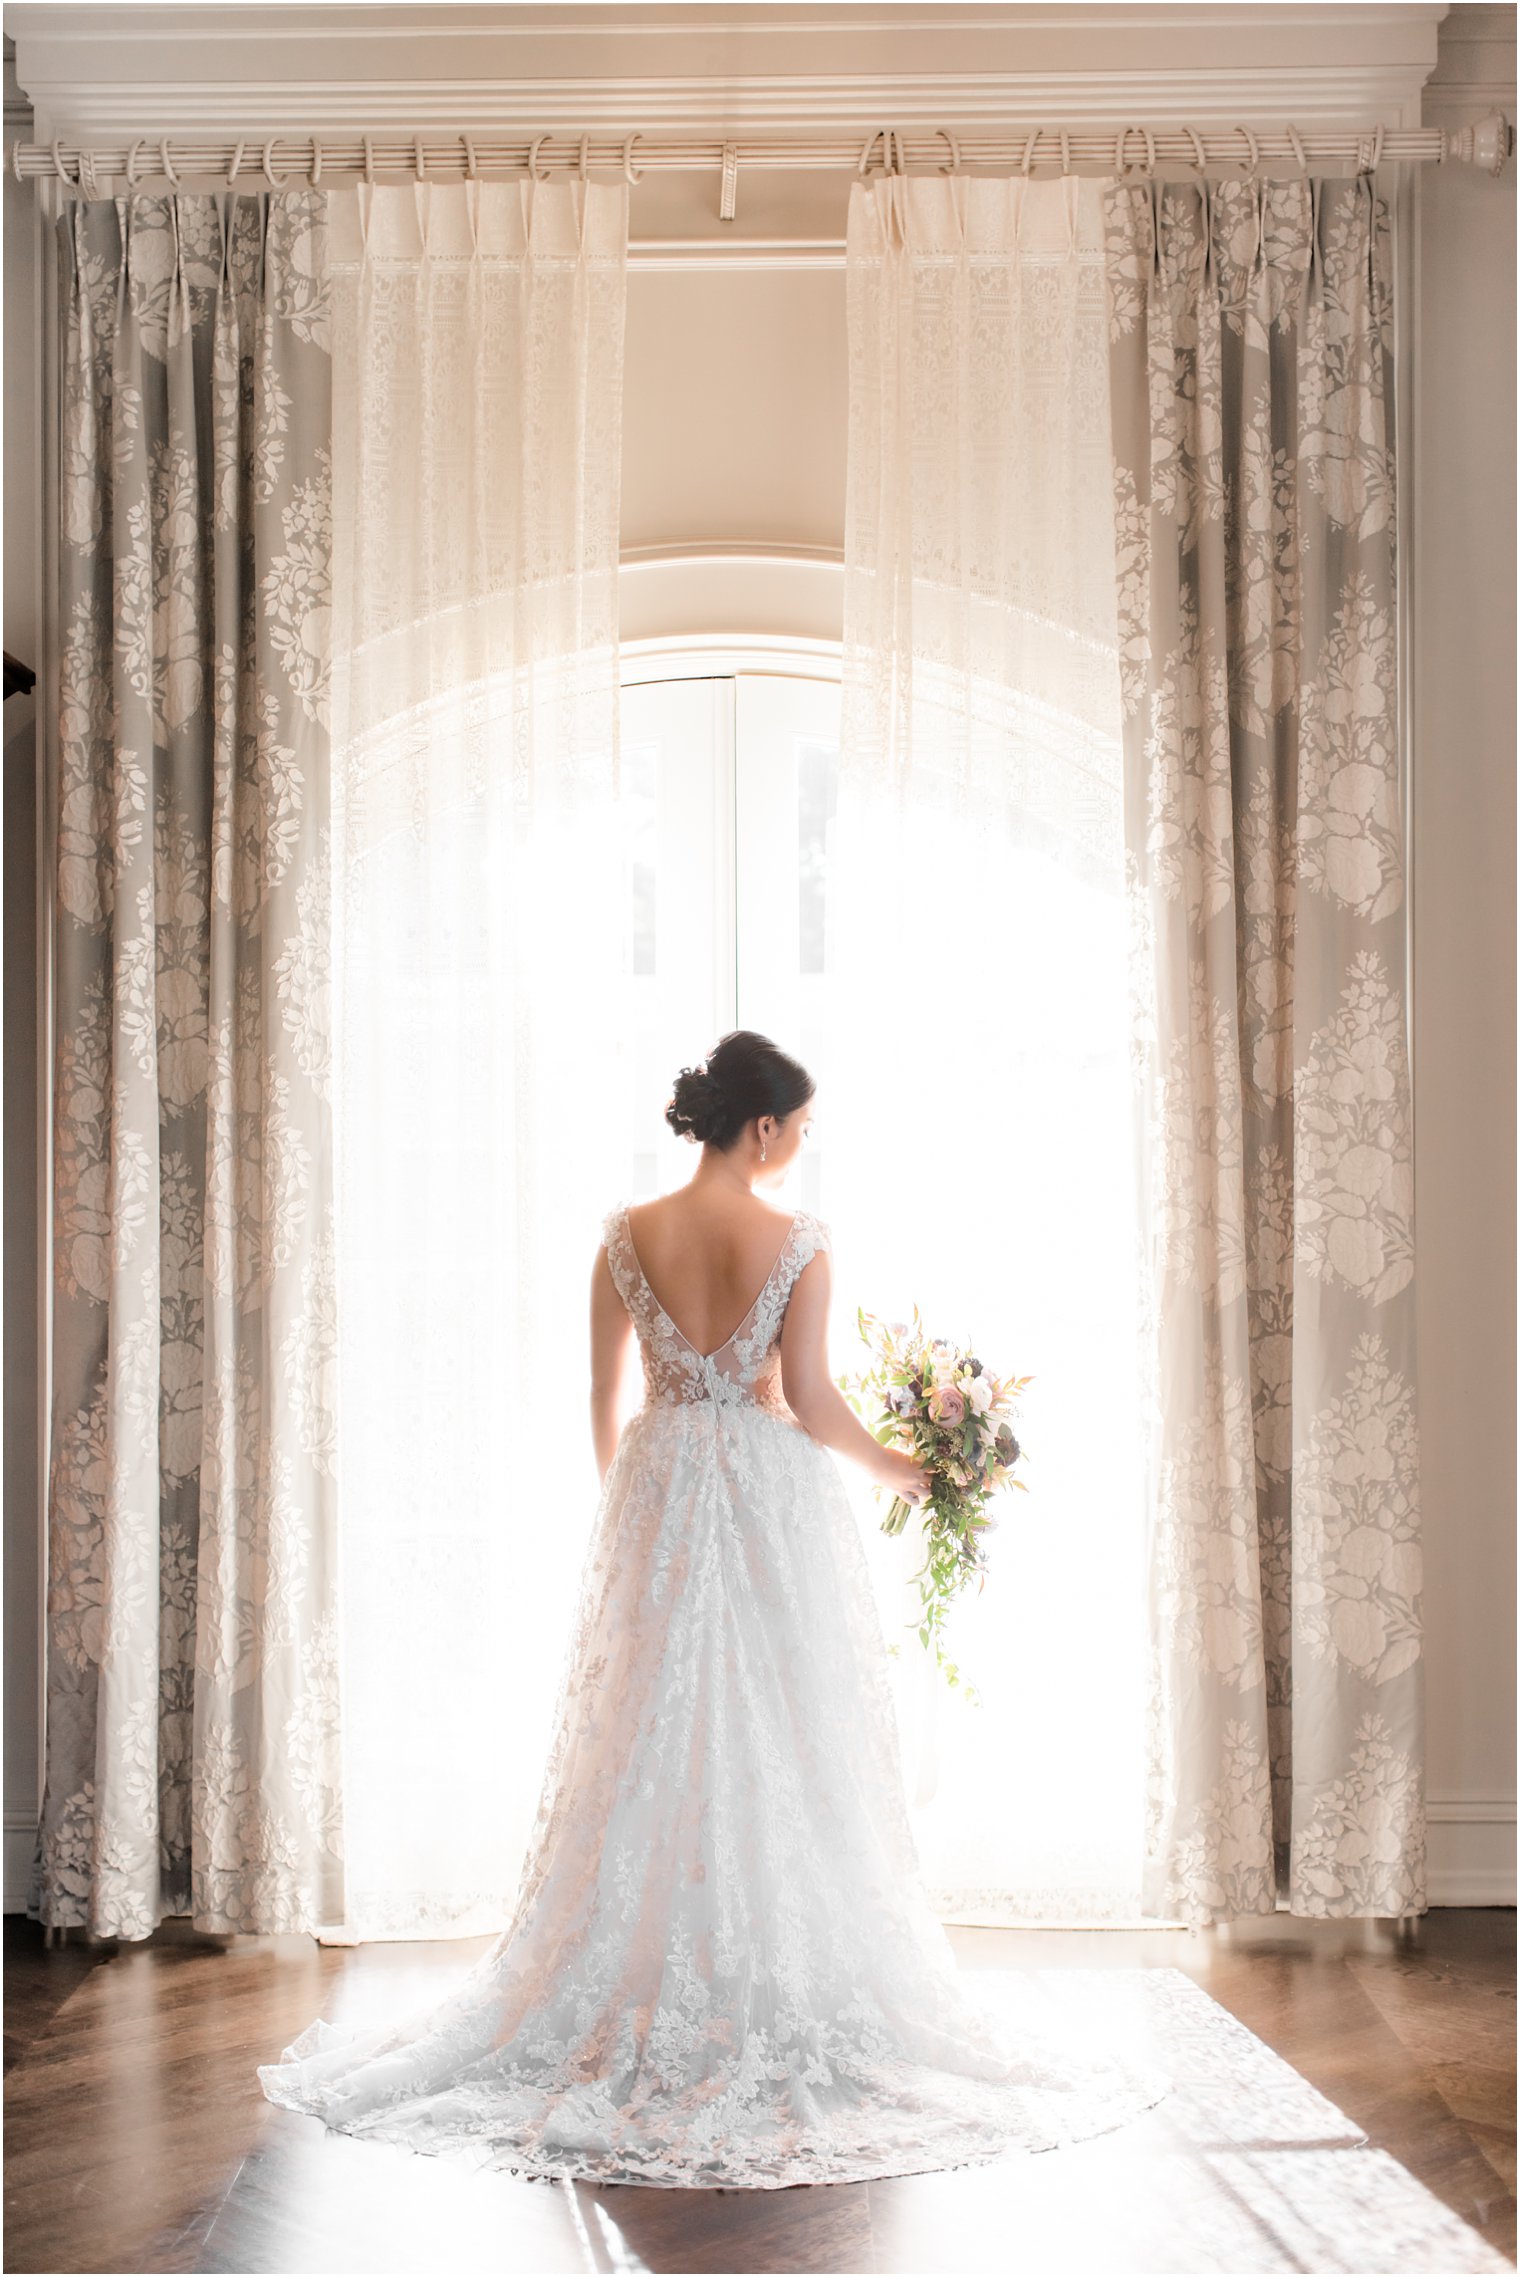 classic bridal portrait at Park Chateau Estate by Idalia Photography